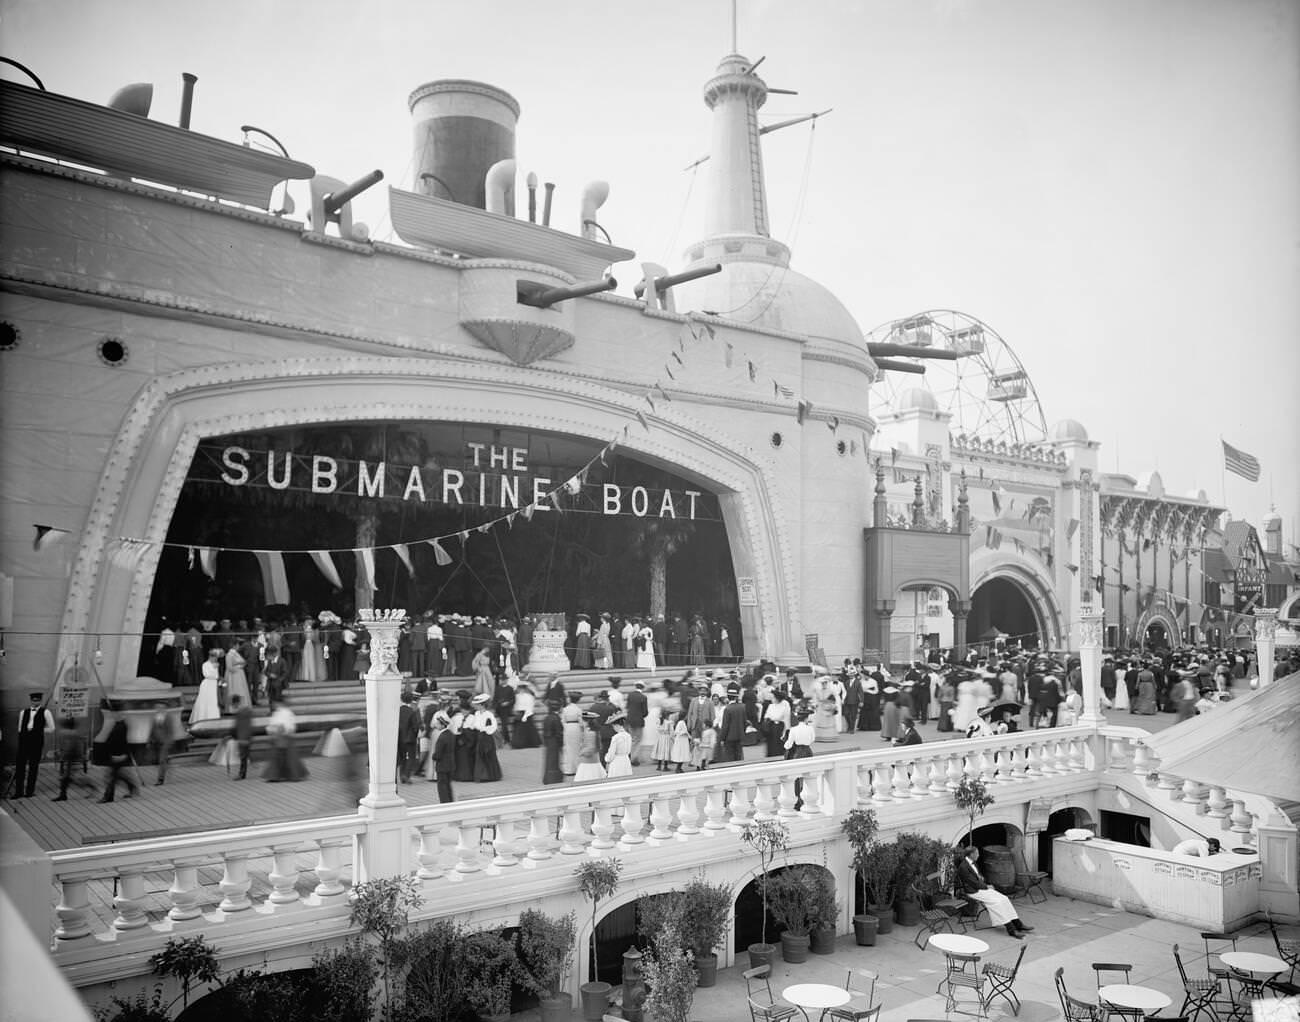 Submarine Boat Building At Coney Island, Brooklyn, 1900